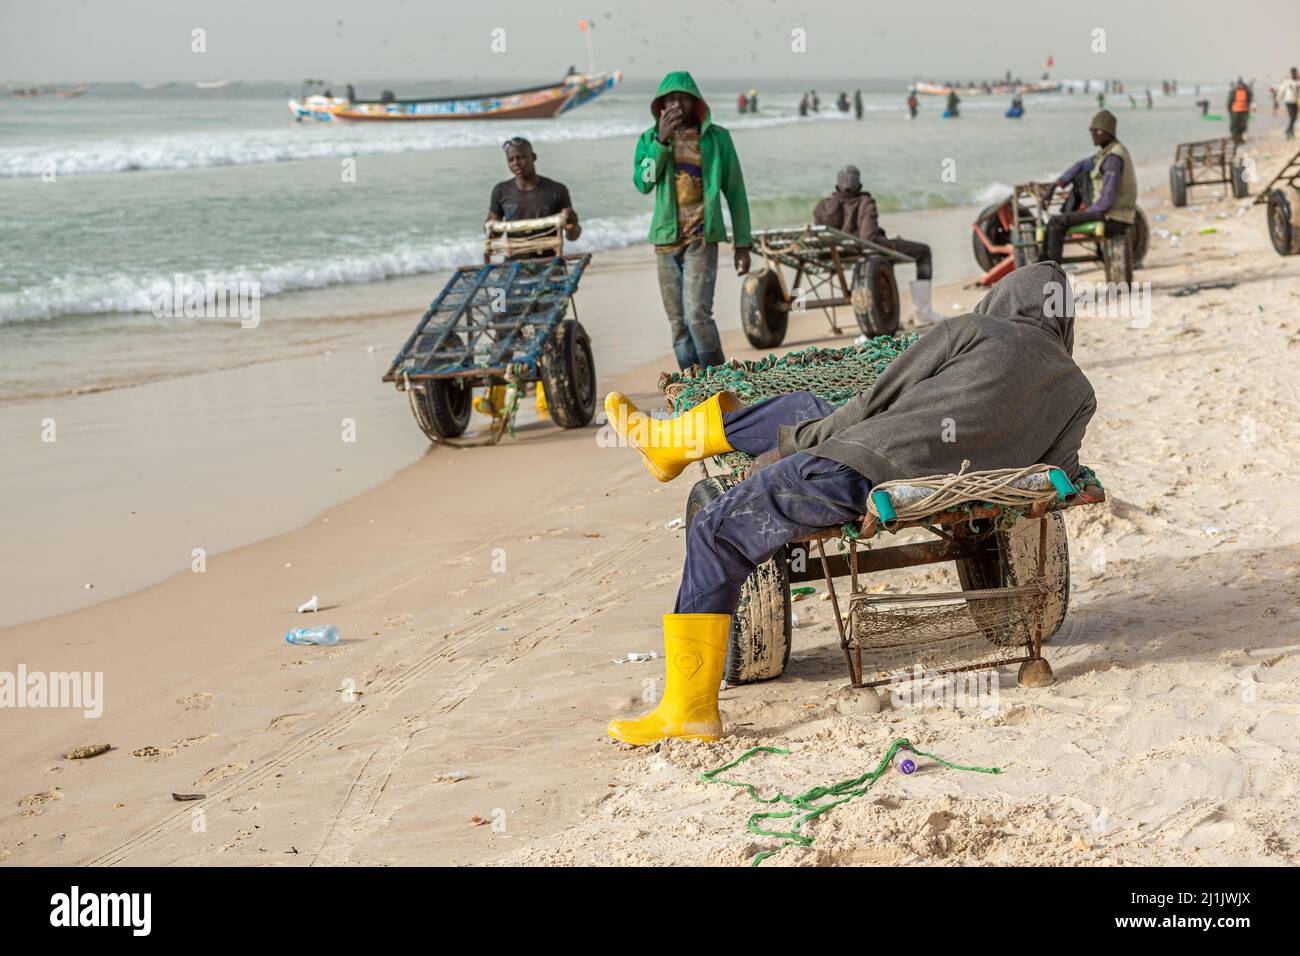 A porter resting on a cart after downloading loads at Nouakchott fish market, Mauritania Stock Photo